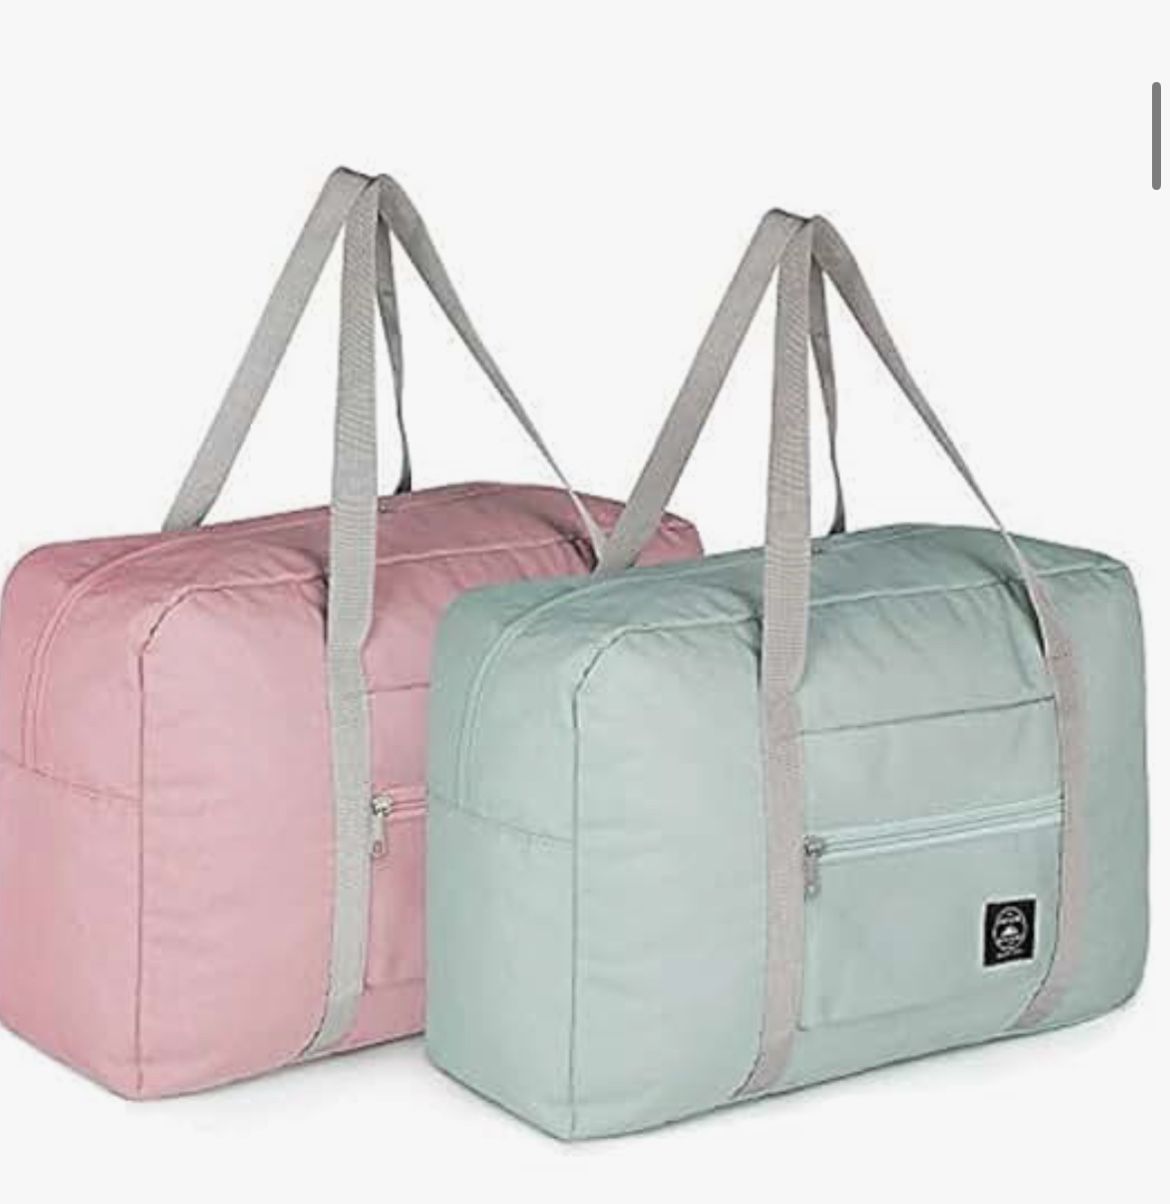 2 Pack Foldable Duffle Bag 